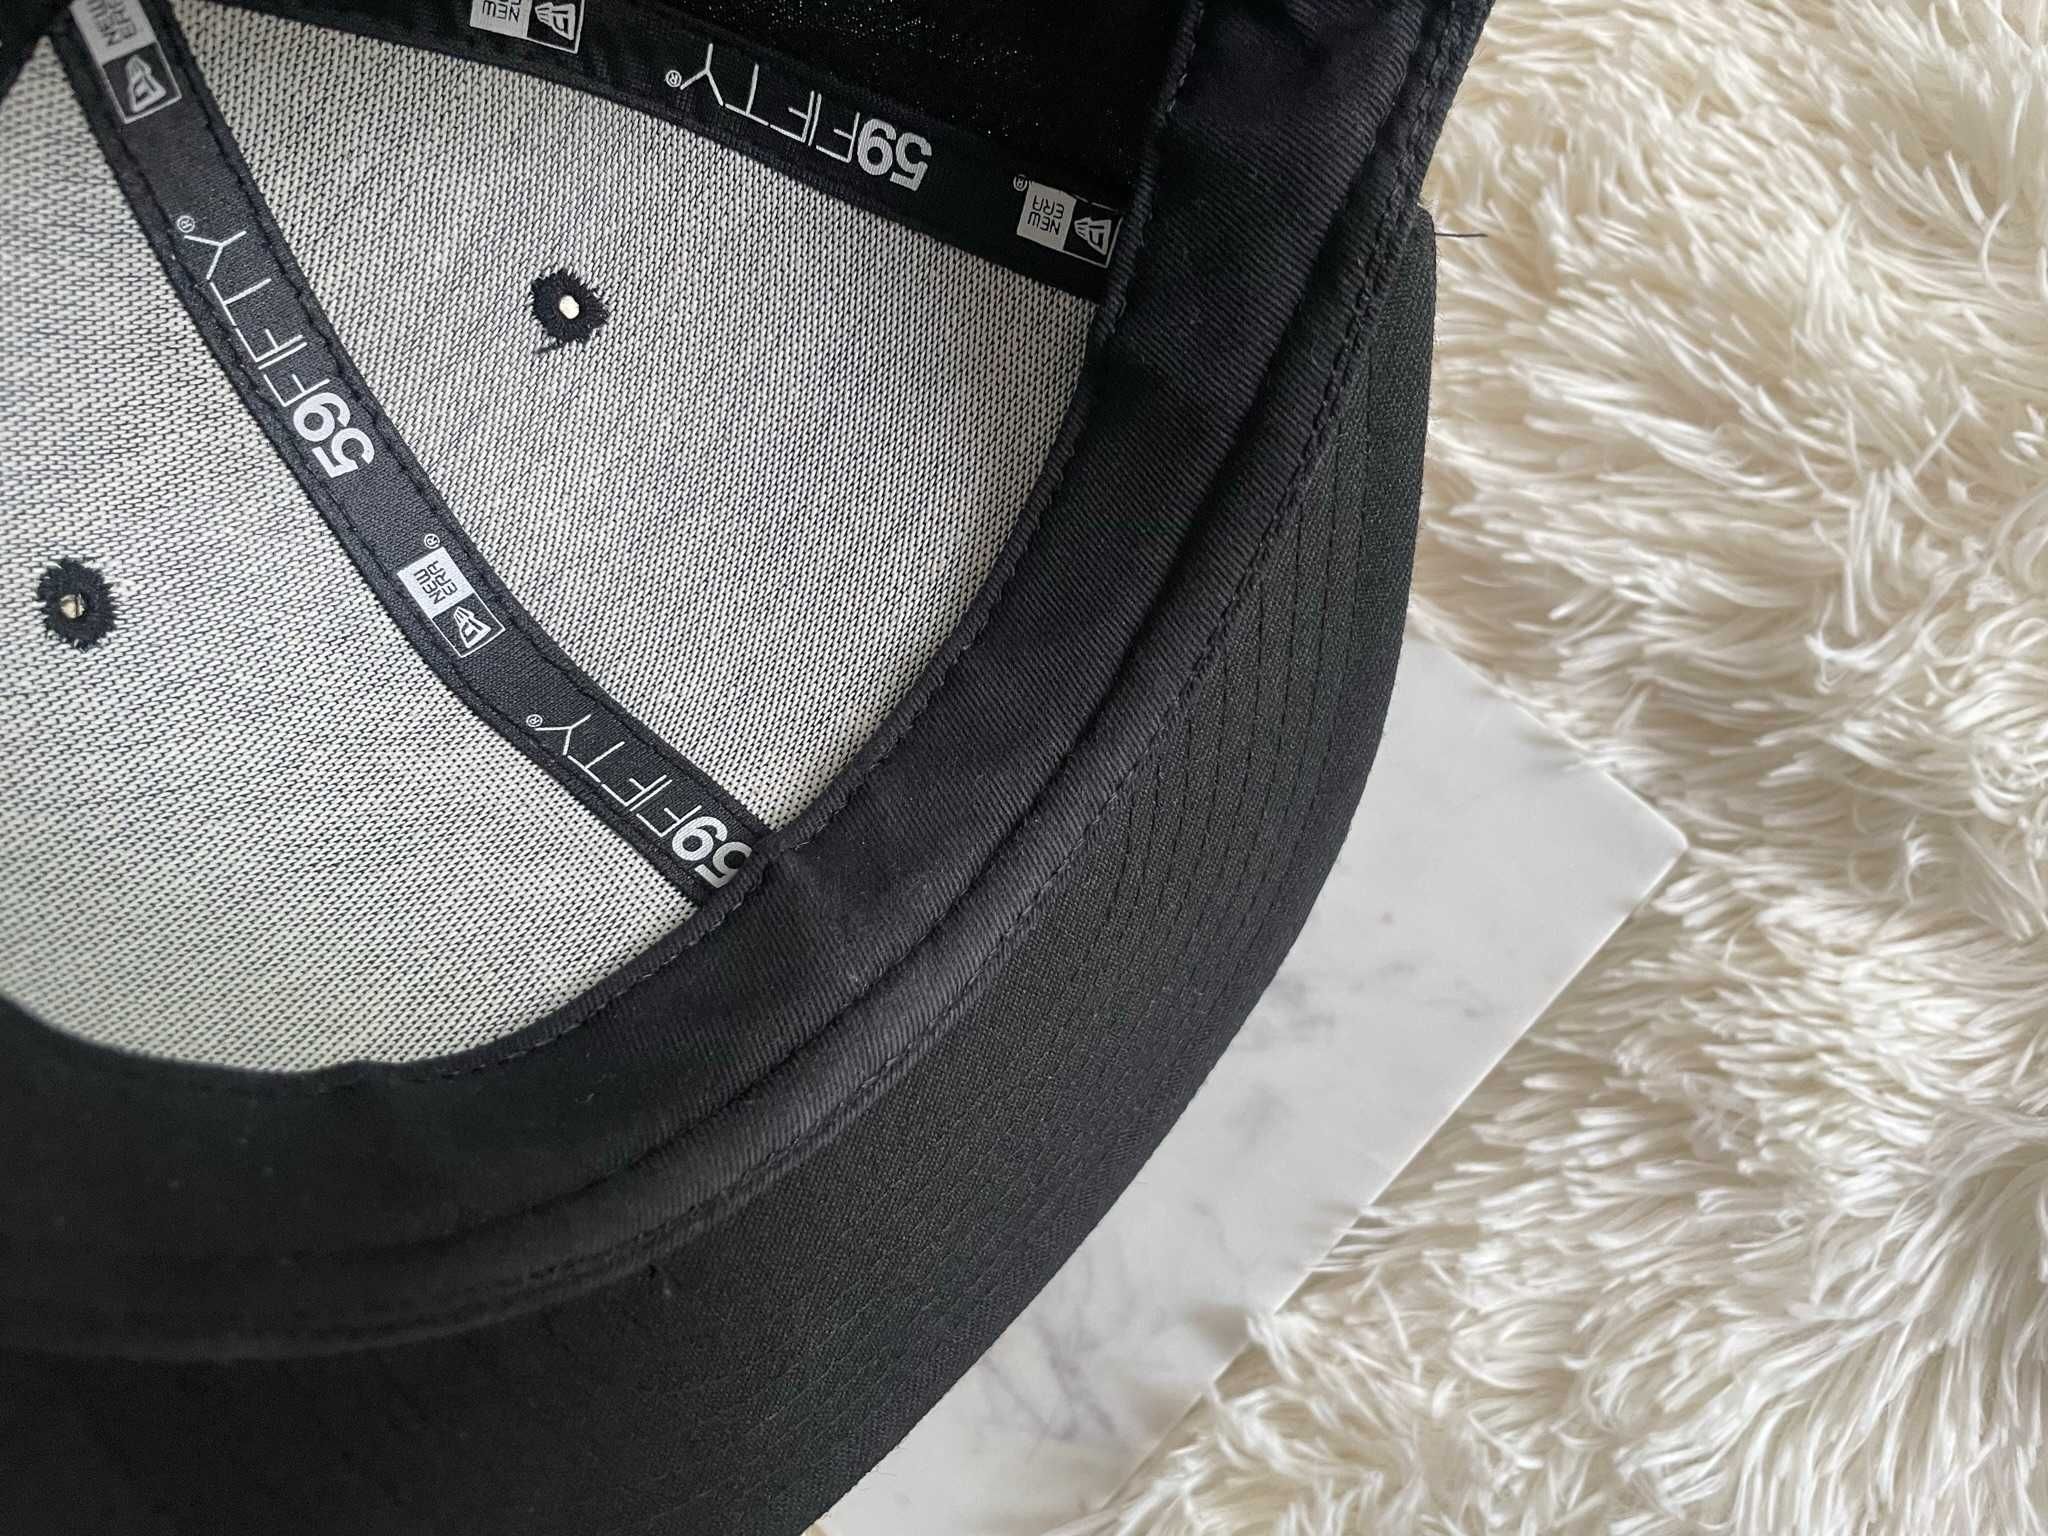 New Era full cap czarna czapka Atlanta wełna 59fifty 7 55,8 cm uniseks